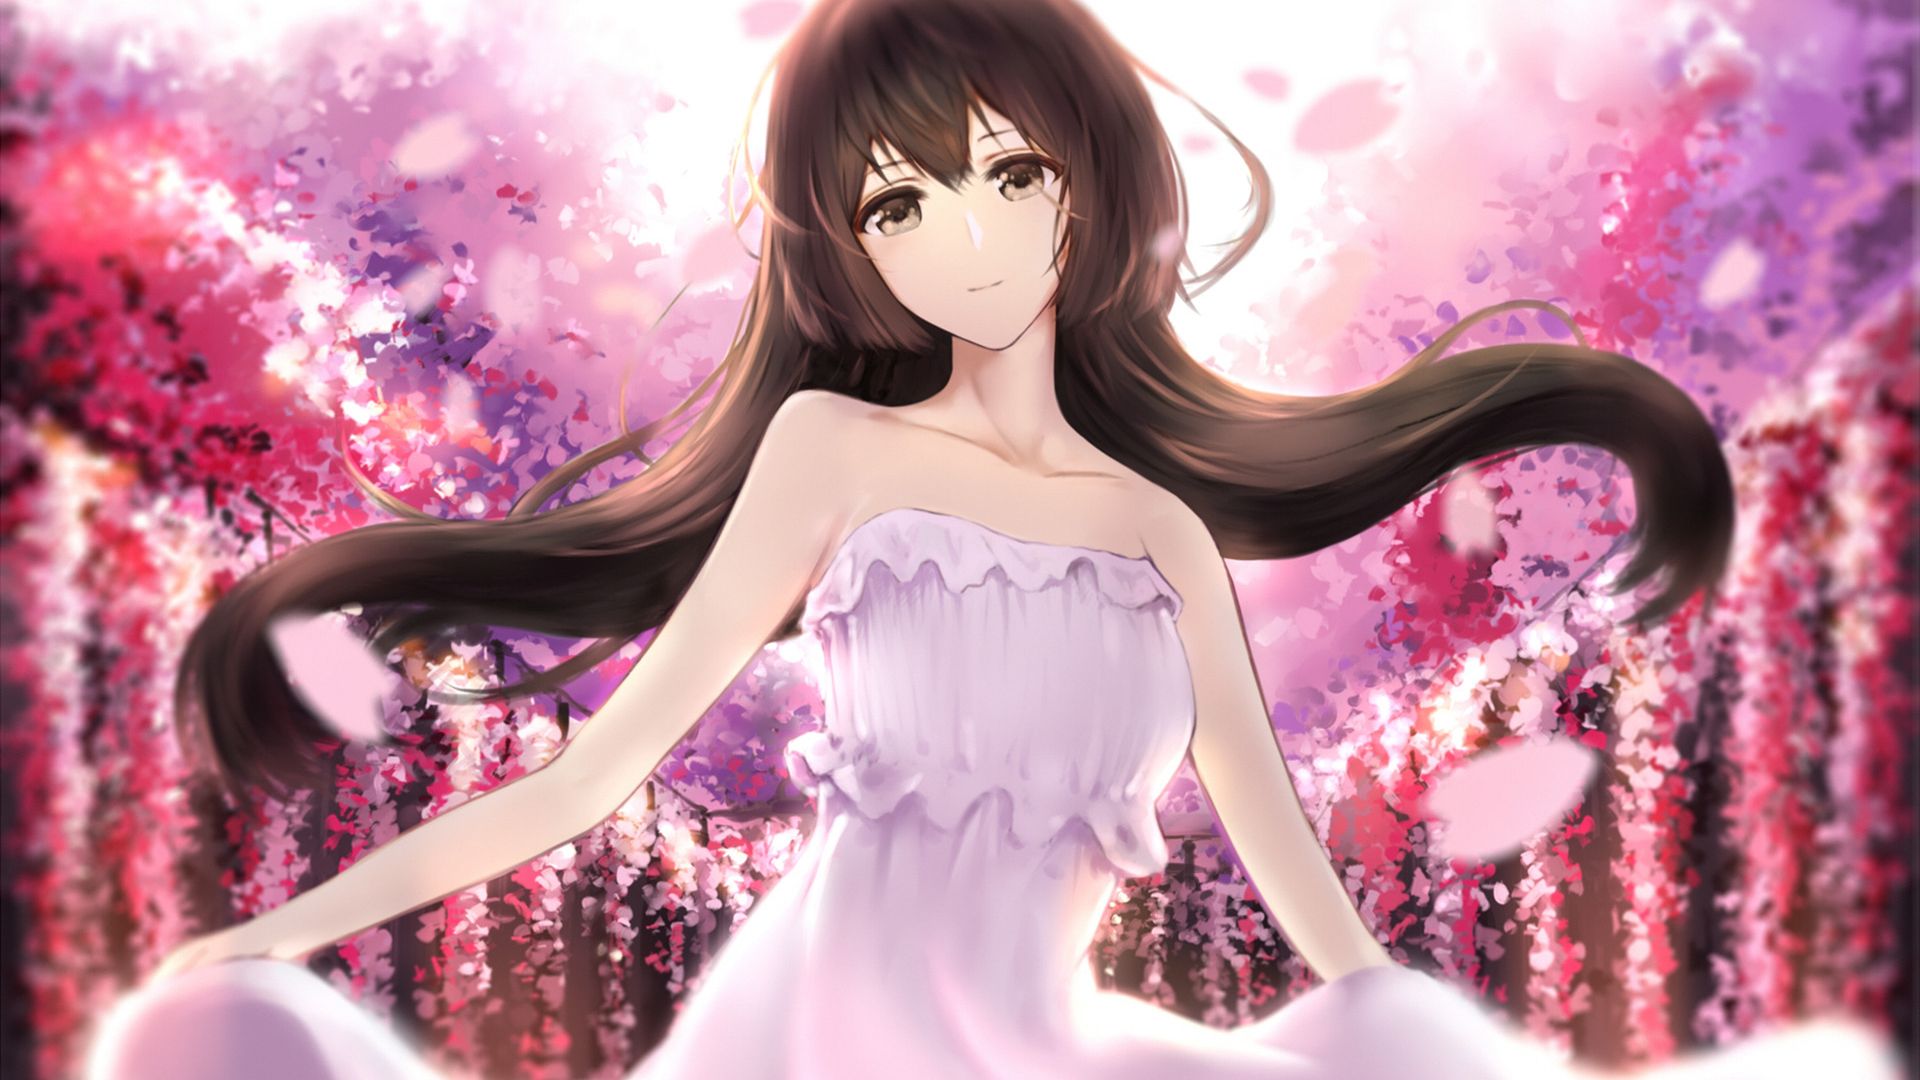 Download 1920x1080 wallpaper dance, cherry blossom, pink dress, anime girl, full hd, hdtv, fhd, 1080p, 1920x1080 HD image, background, 3510